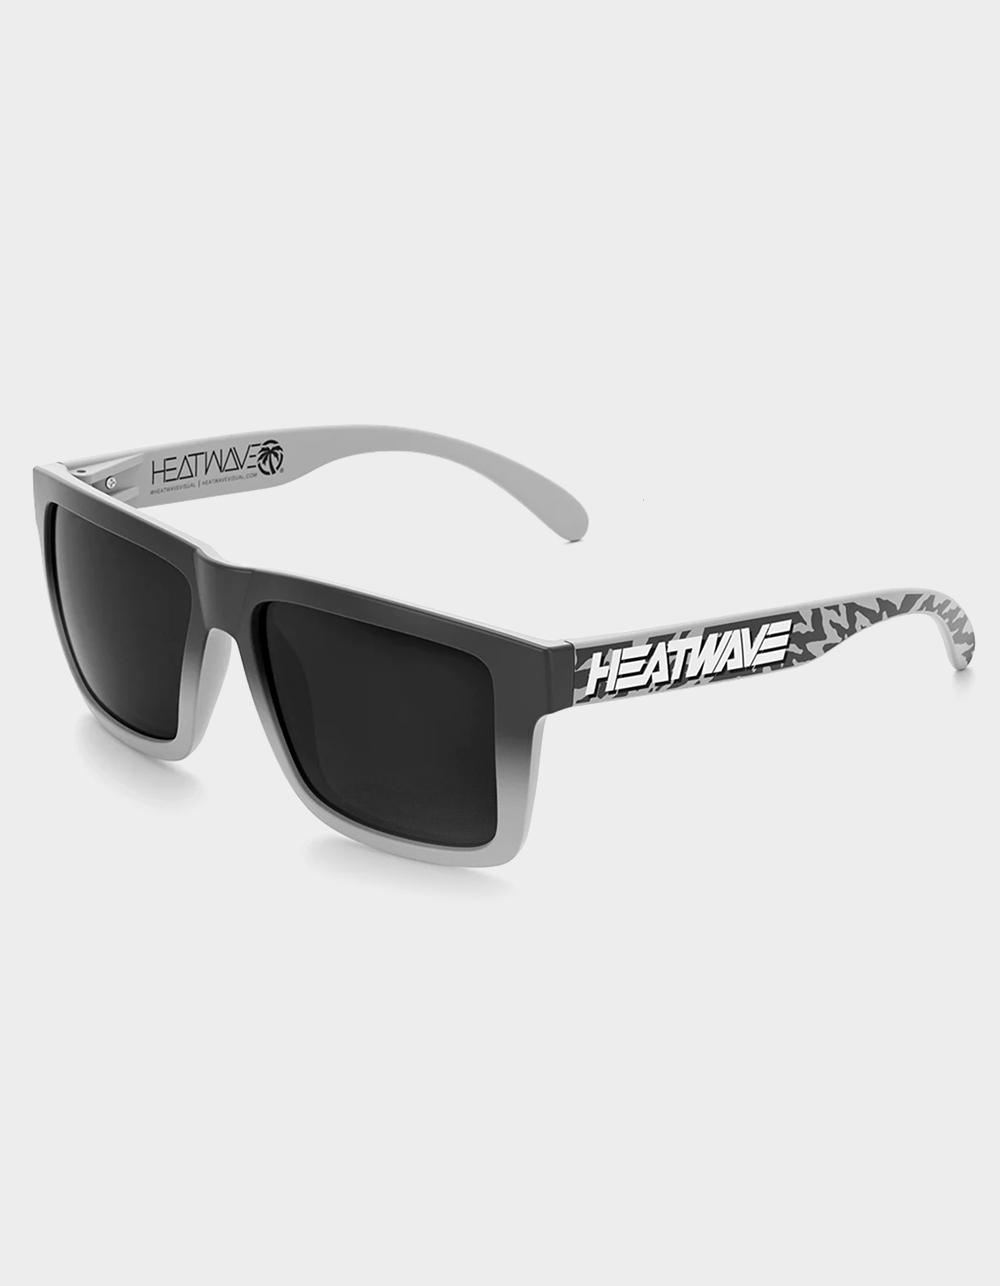 HEATWAVE VISUAL XL Vise Z87 Hydroshock Polarized Sunglasses - GRAY